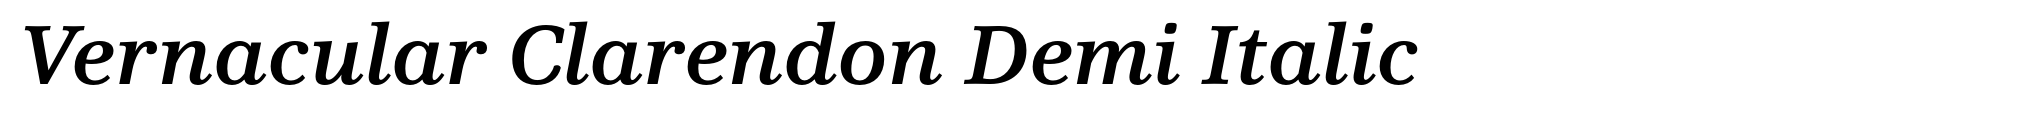 Vernacular Clarendon Demi Italic image